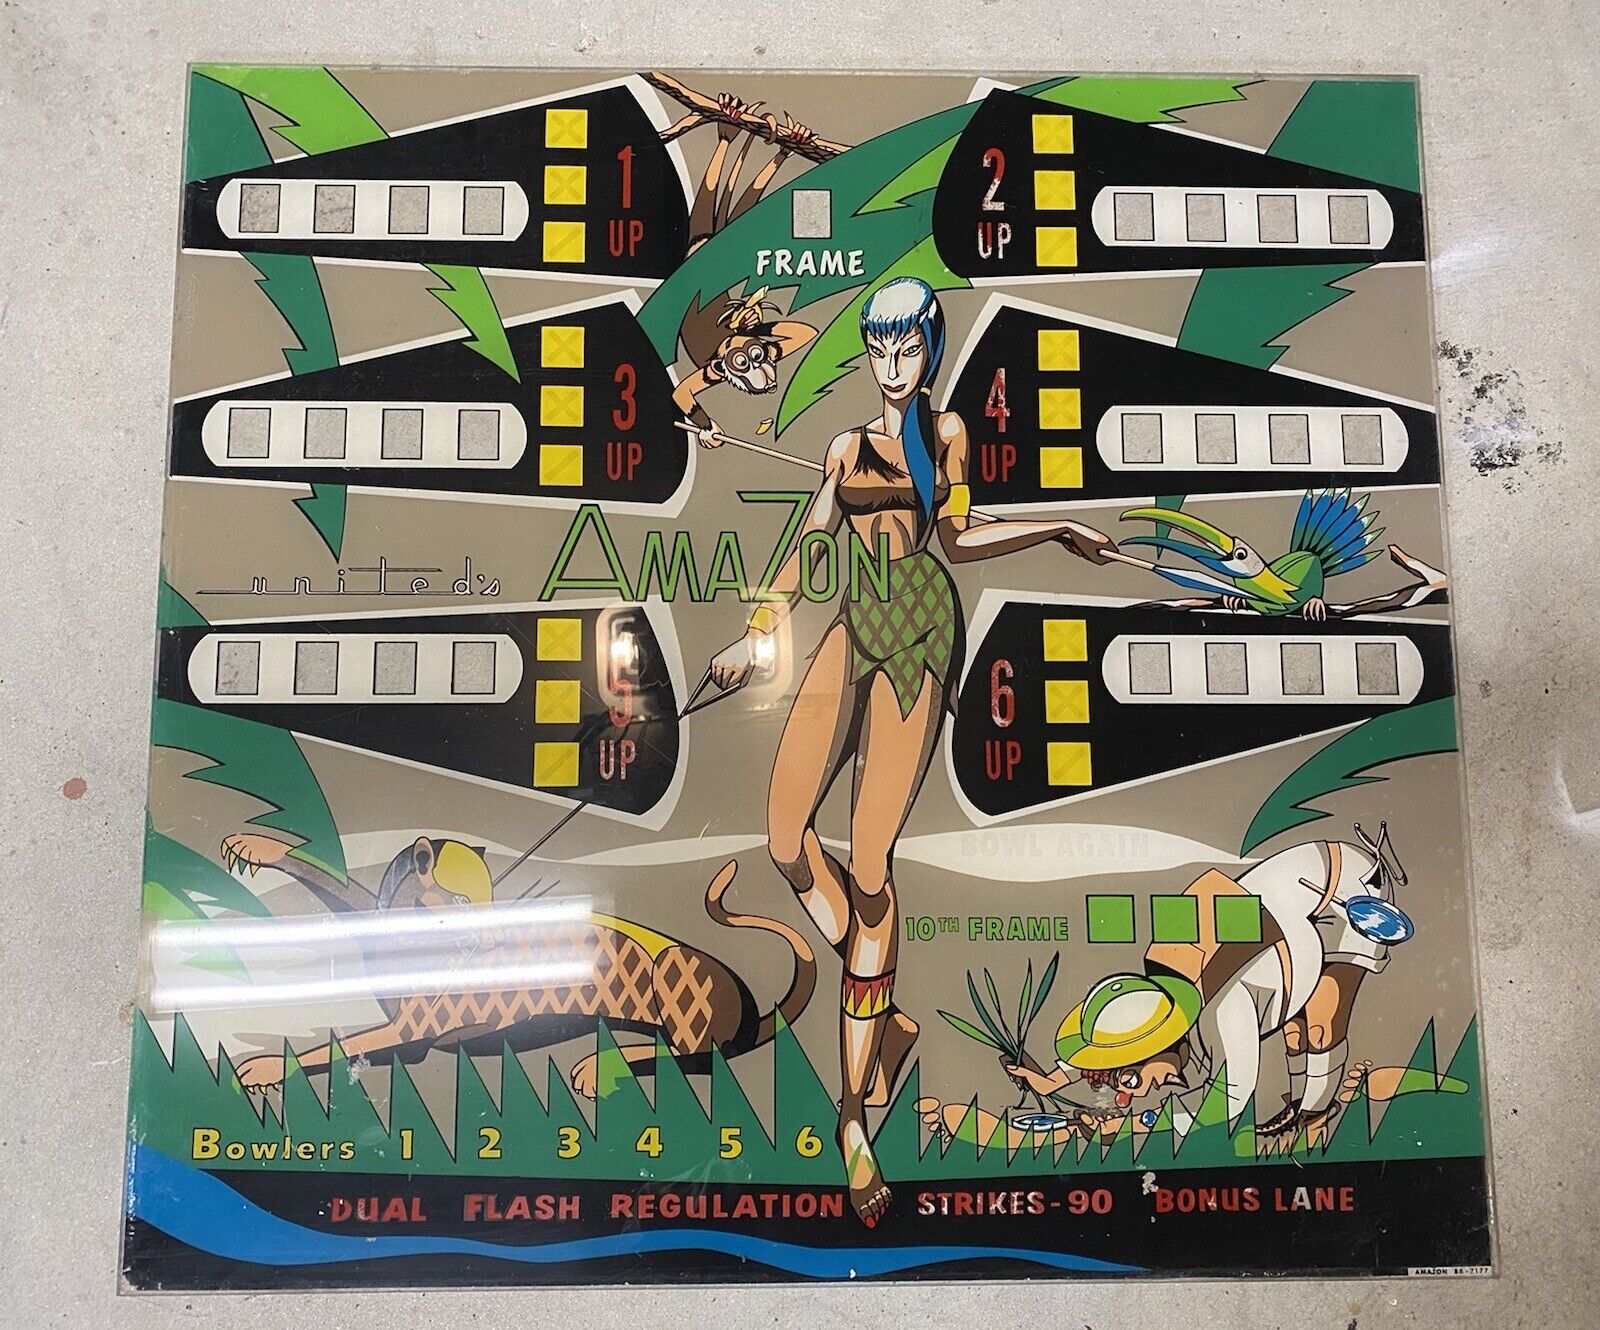 Original Vintage UNITEDS AMAZON Bowling Arcade Marquee Sign 1970s 1980s 34X32